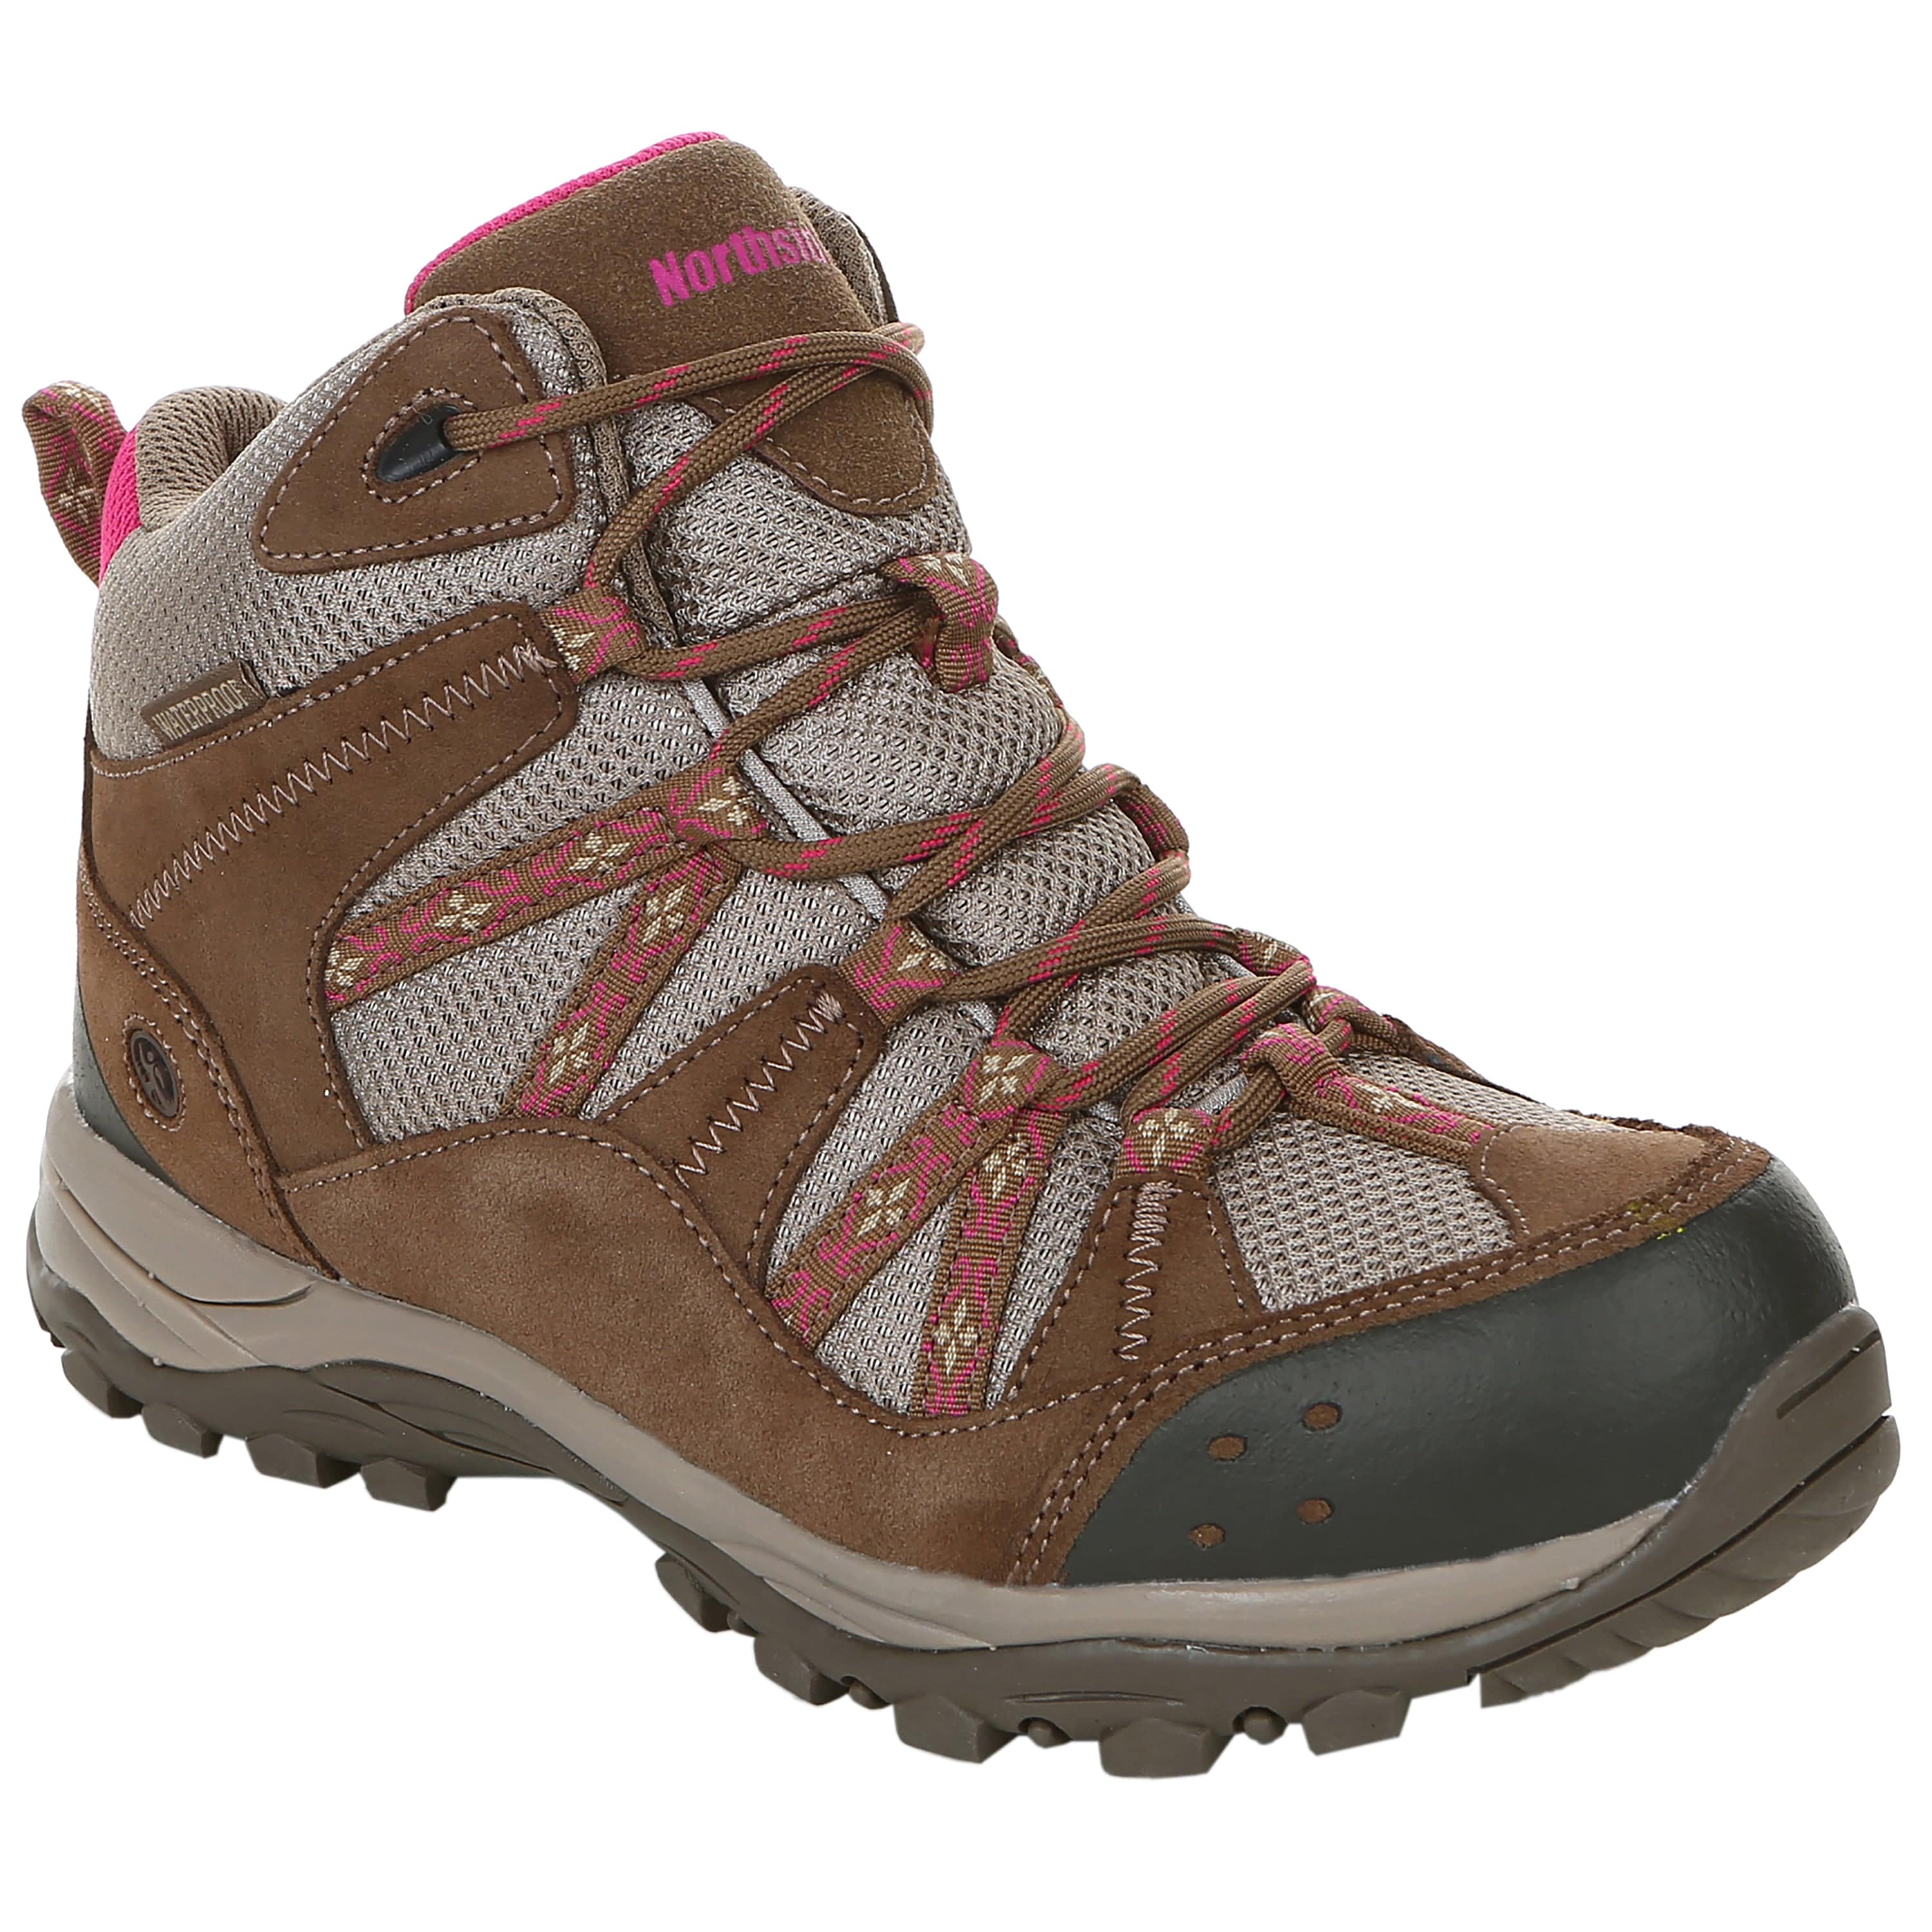 Womens waterproof hiking boots